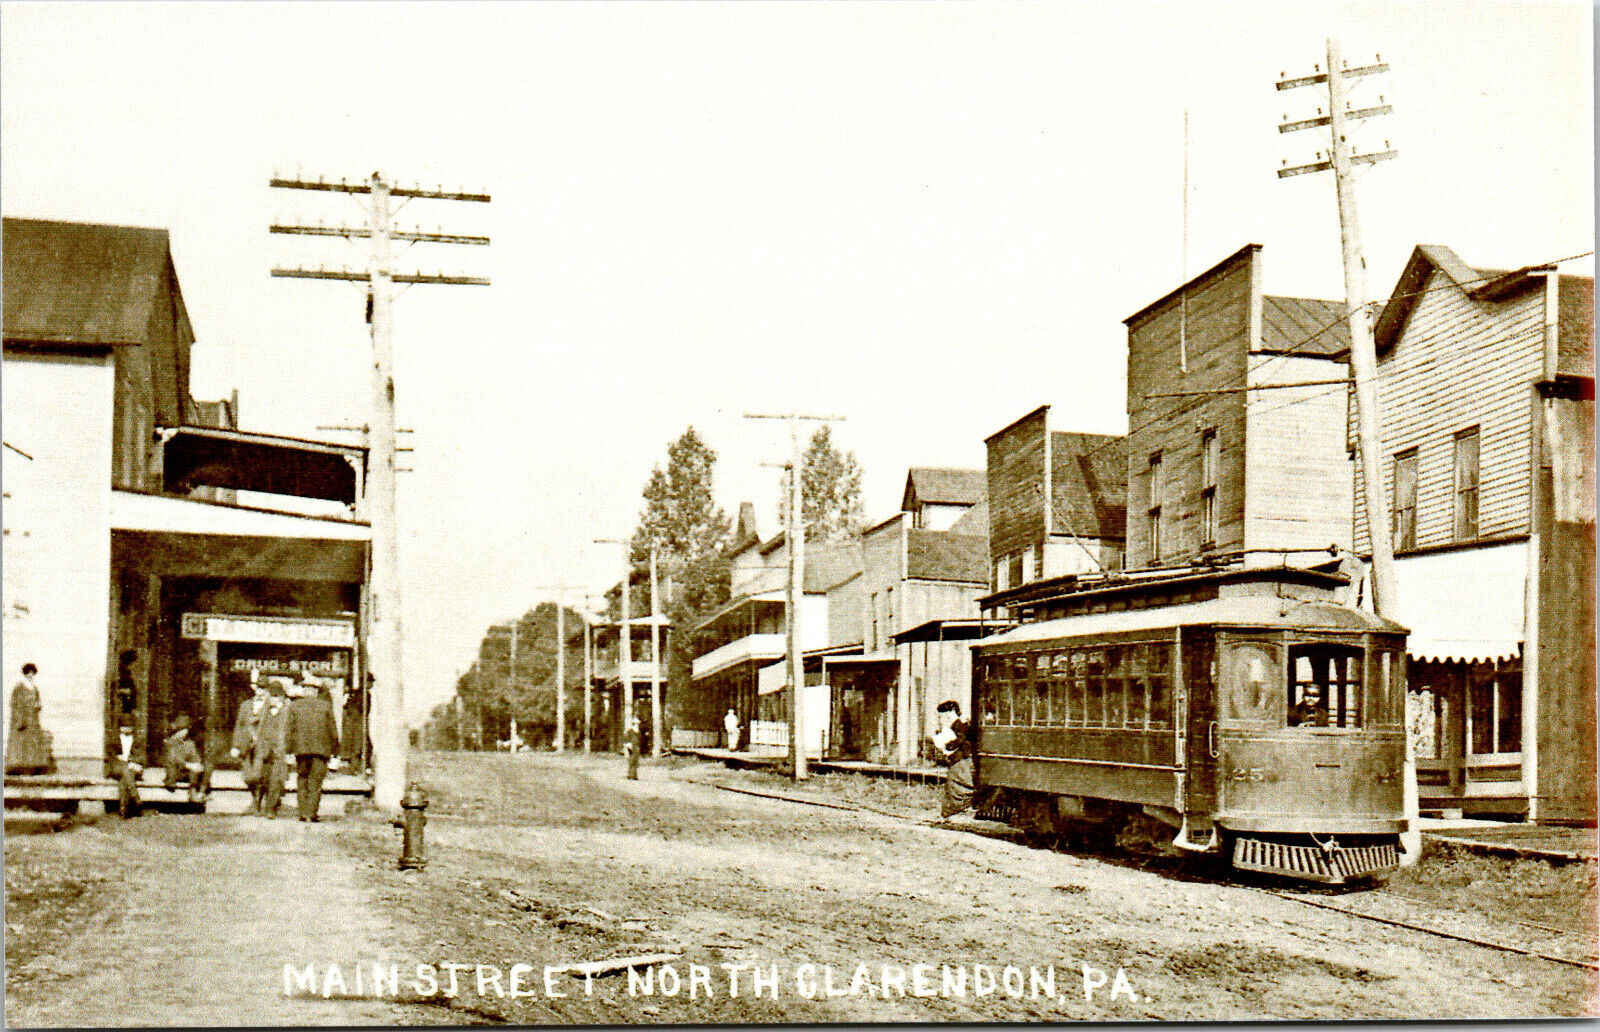 North Clarendon PA Railway Postcard Trolley Interurban Tram RPPC Reprint